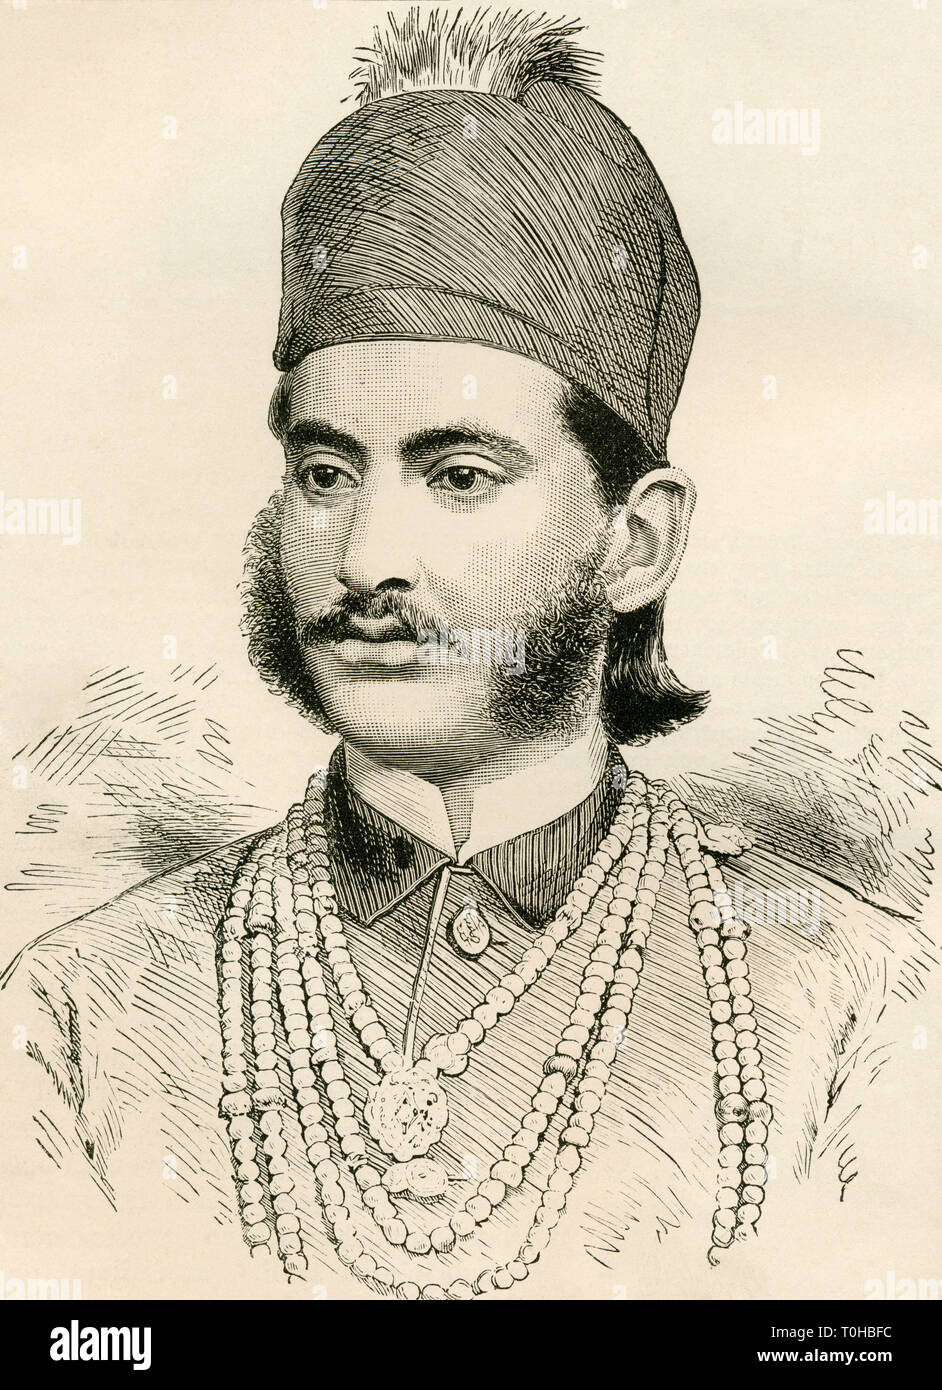 Mahboob Ali Khan, Mahbub Ali Khan, Asaf Jah VI, Sir mir Mahboob Ali Khan Siddiqi Bayafandi, 6. Nizam of Hyderabad, Indien, alter Jahrgang 1800s Gravur Stockfoto